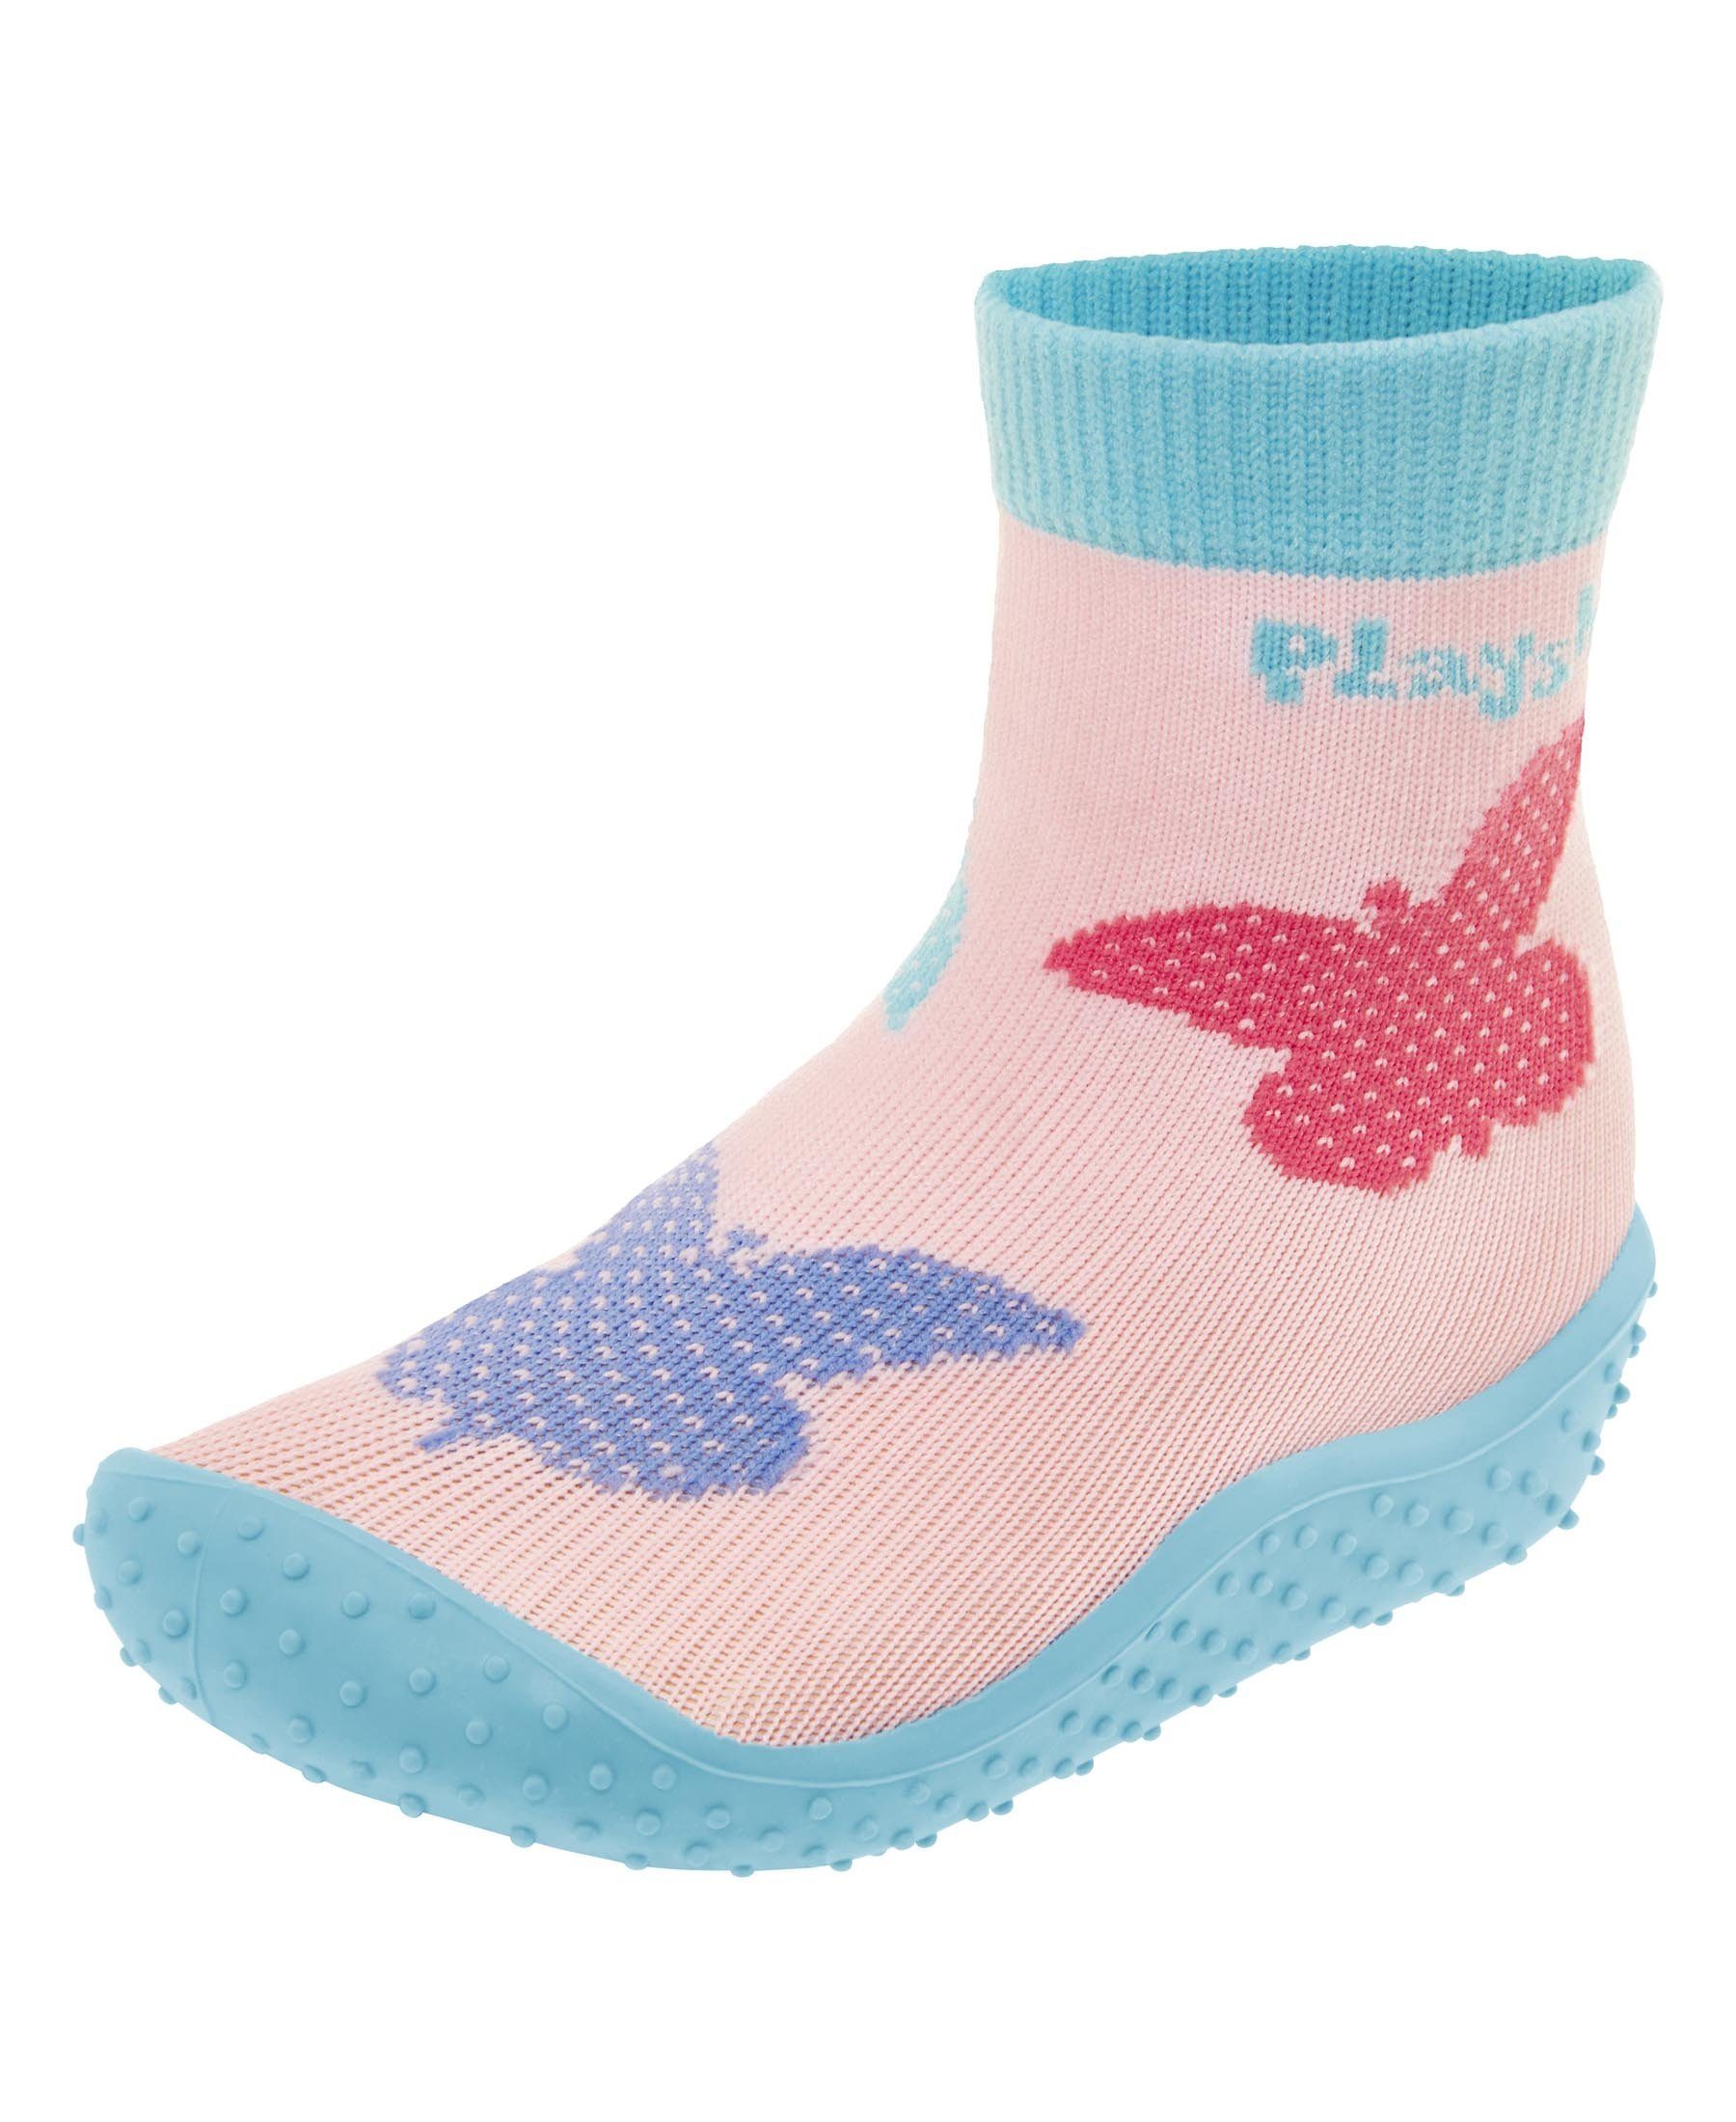 Playshoes Schmetterlinge Aqua-Socke Badeschuh